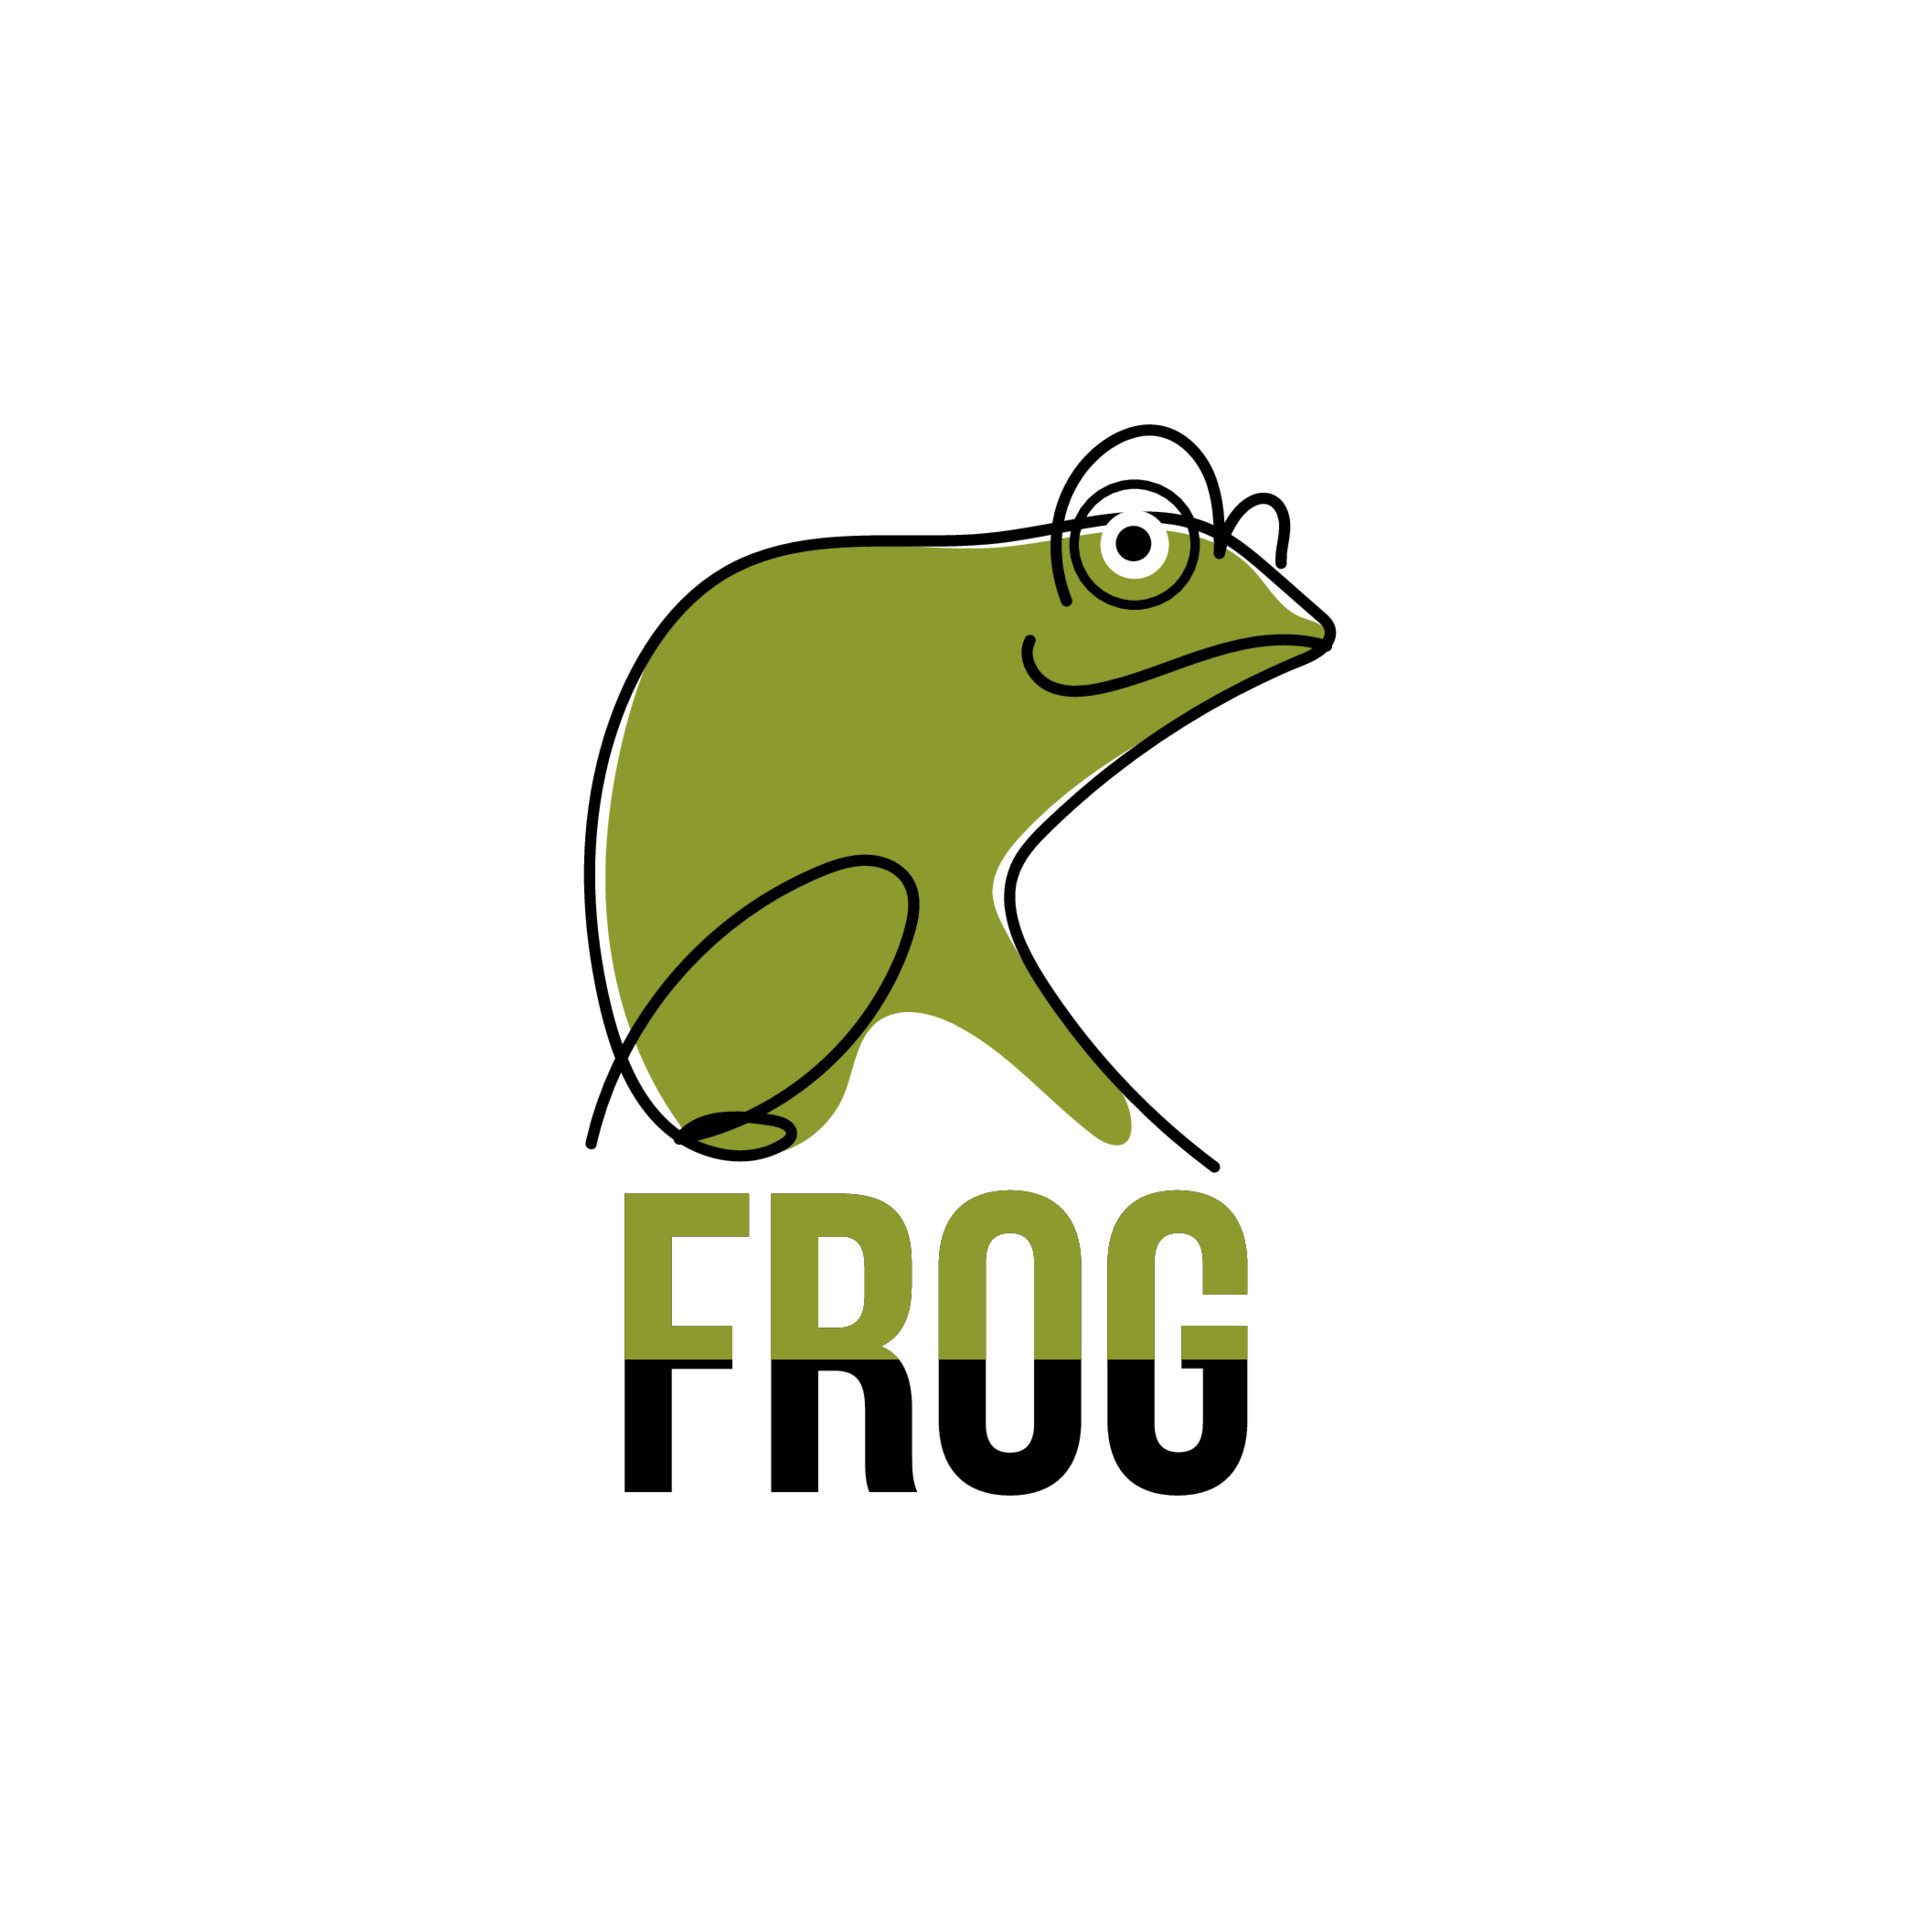 Cute frog icon character logo vector illustration. 13599250 Vector Art ...